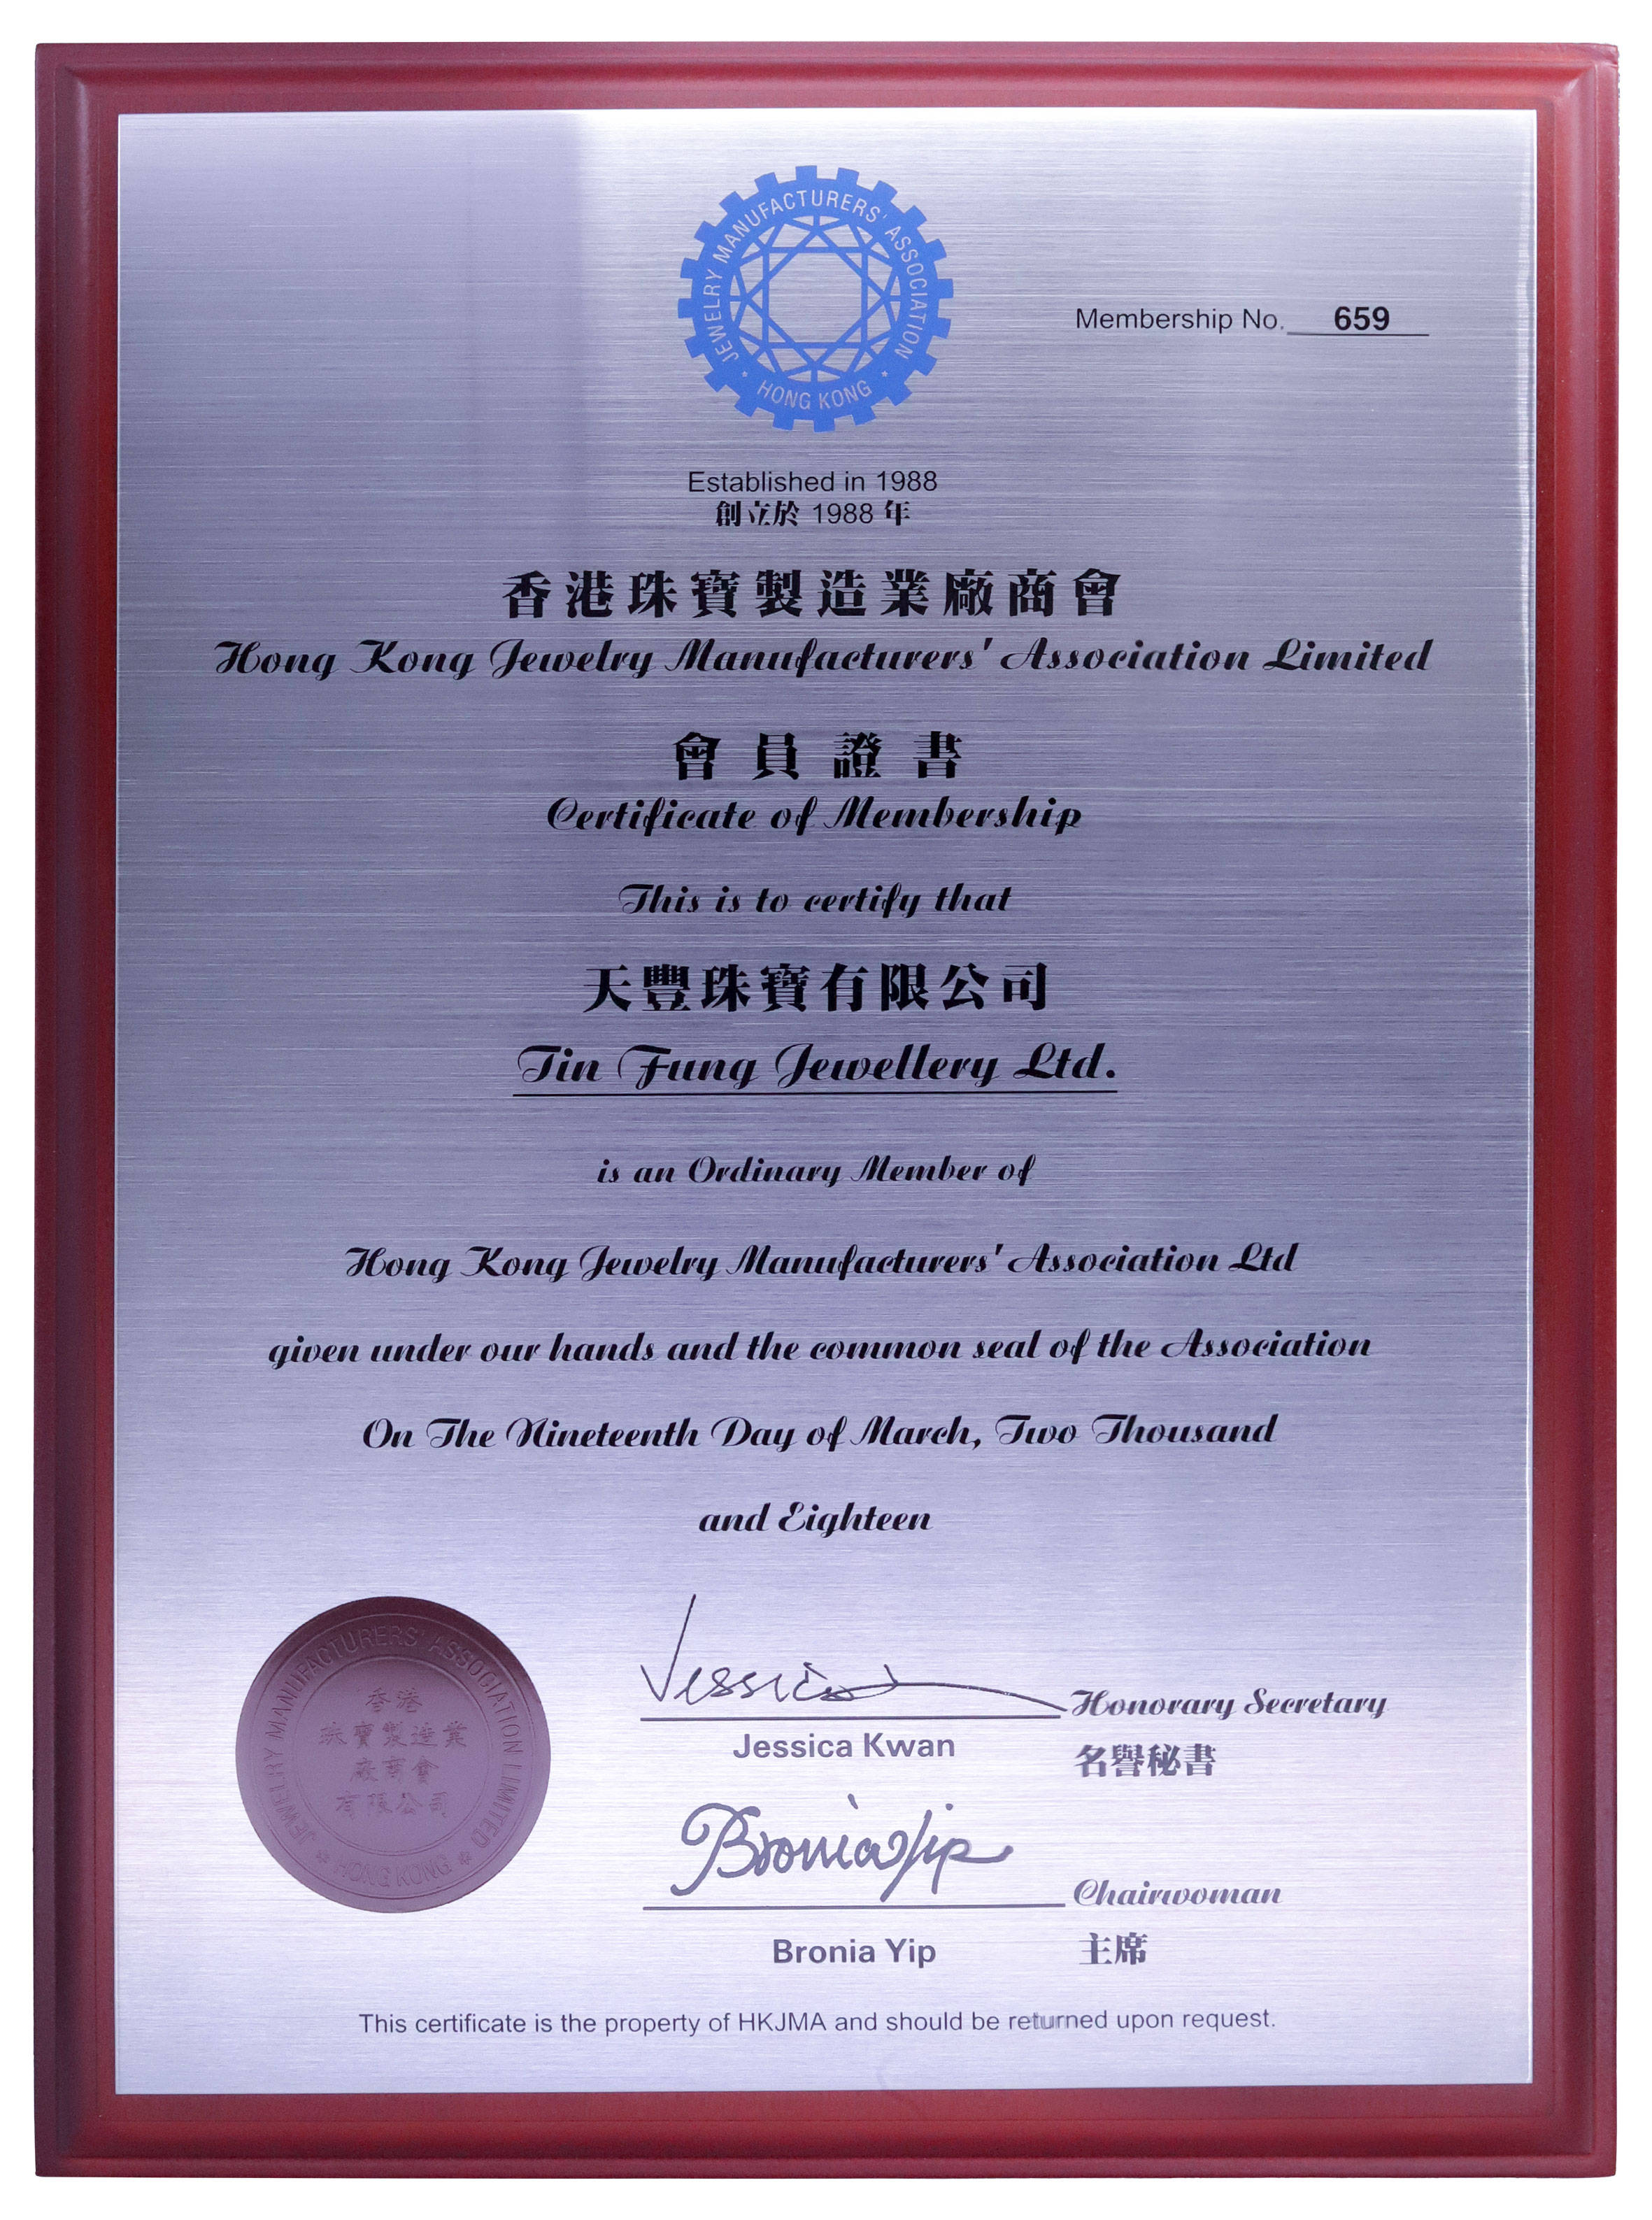 Hong Kong jewelry Manulacturers' Association Limited Certilicate of Membership